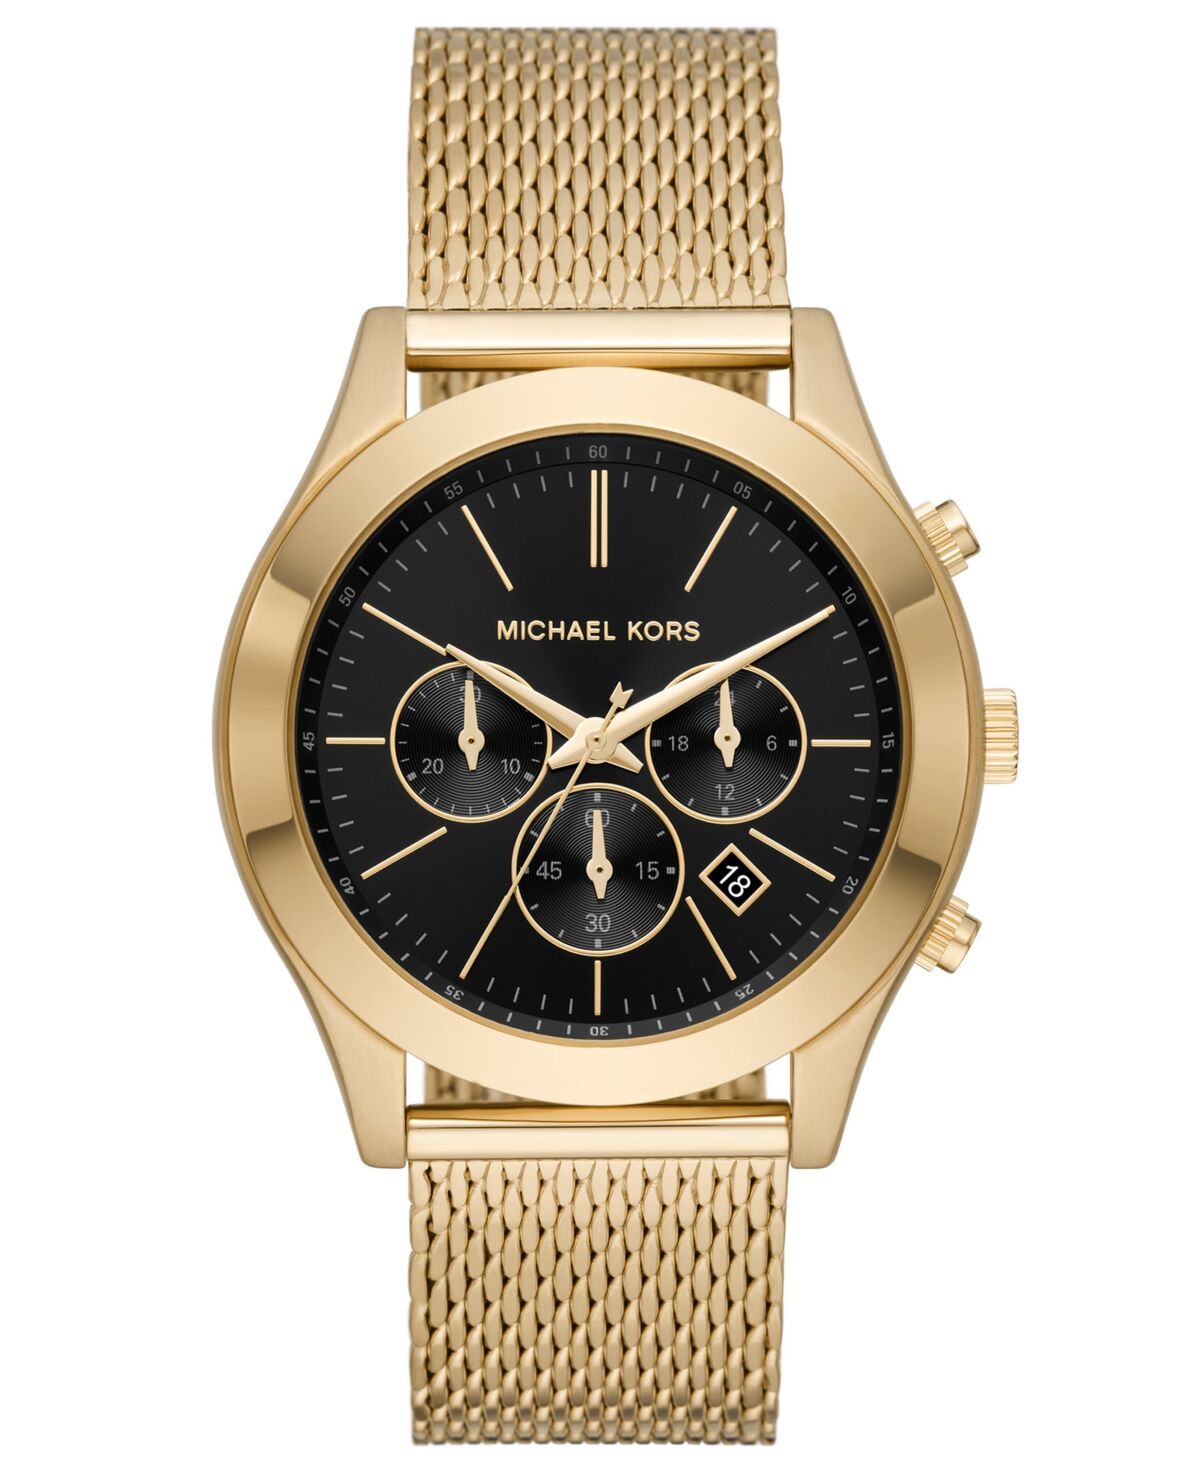 Michael Kors Men's Slim Runway Chronograph Gold-Tone Stainless Steel Mesh Bracelet Watch 44mm - Gold-Tone